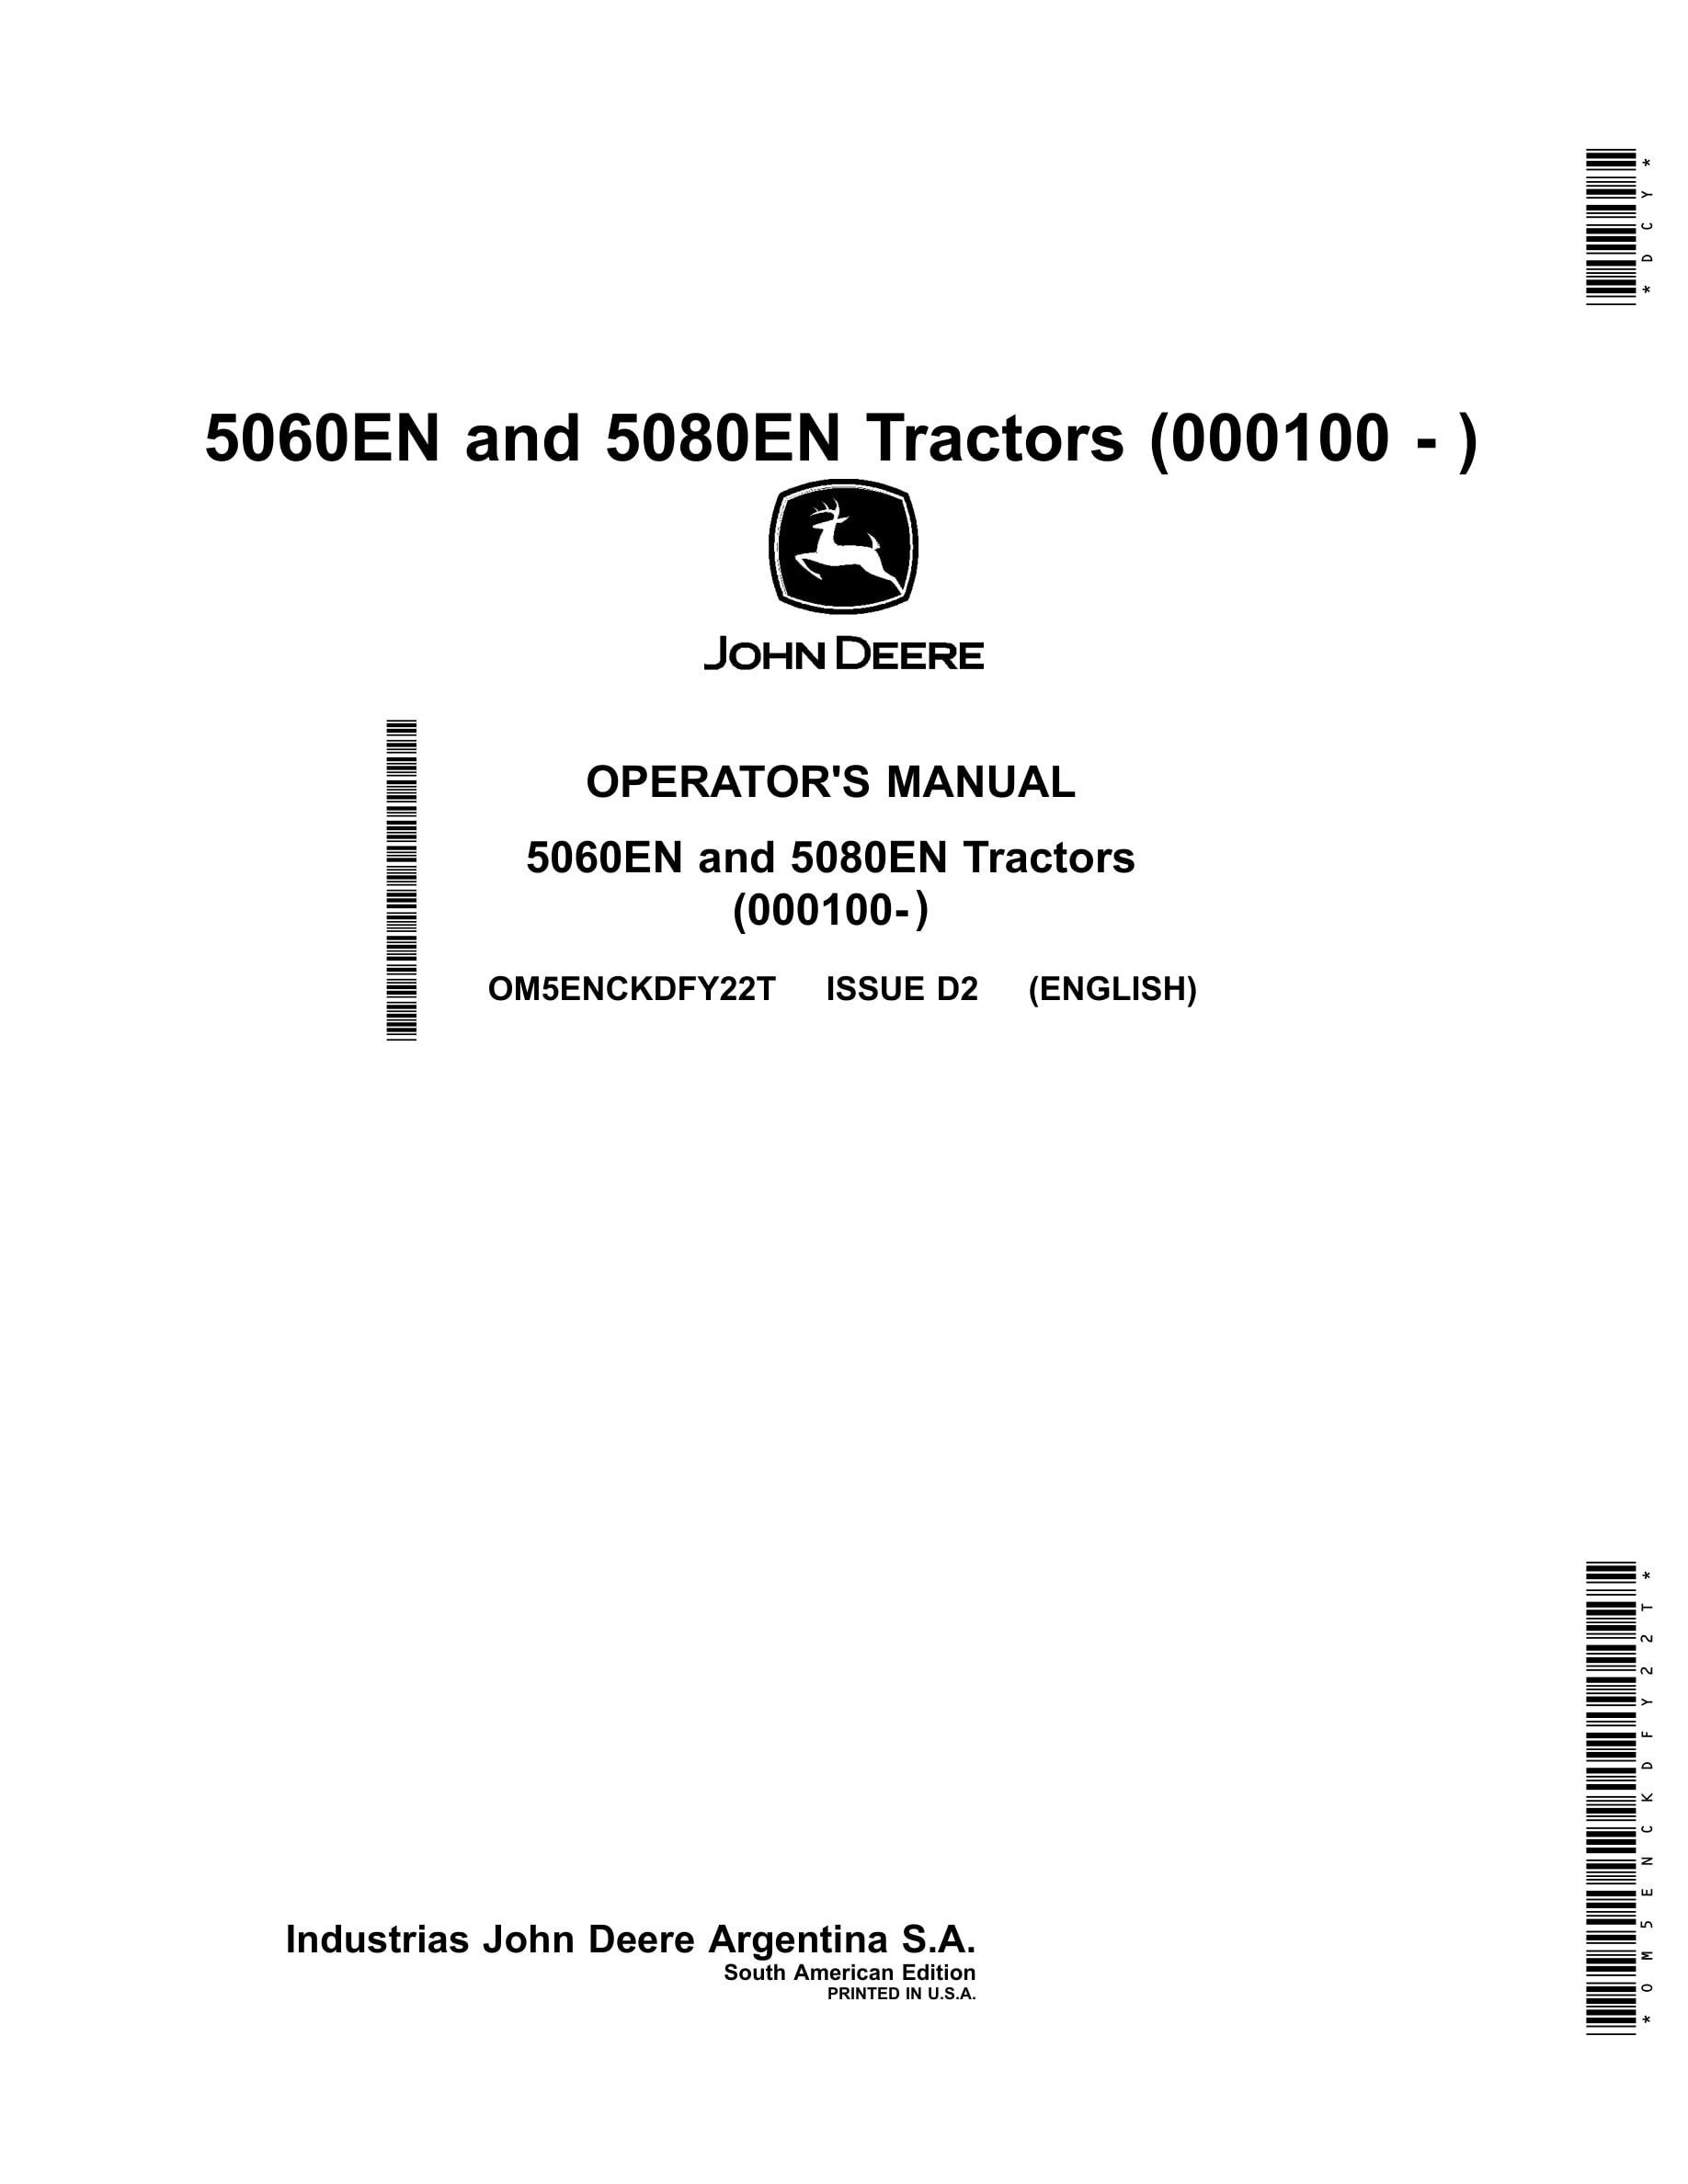 John Deere 5060en And 5080en Tractors Operator Manuals Om5enckdfy22t-1